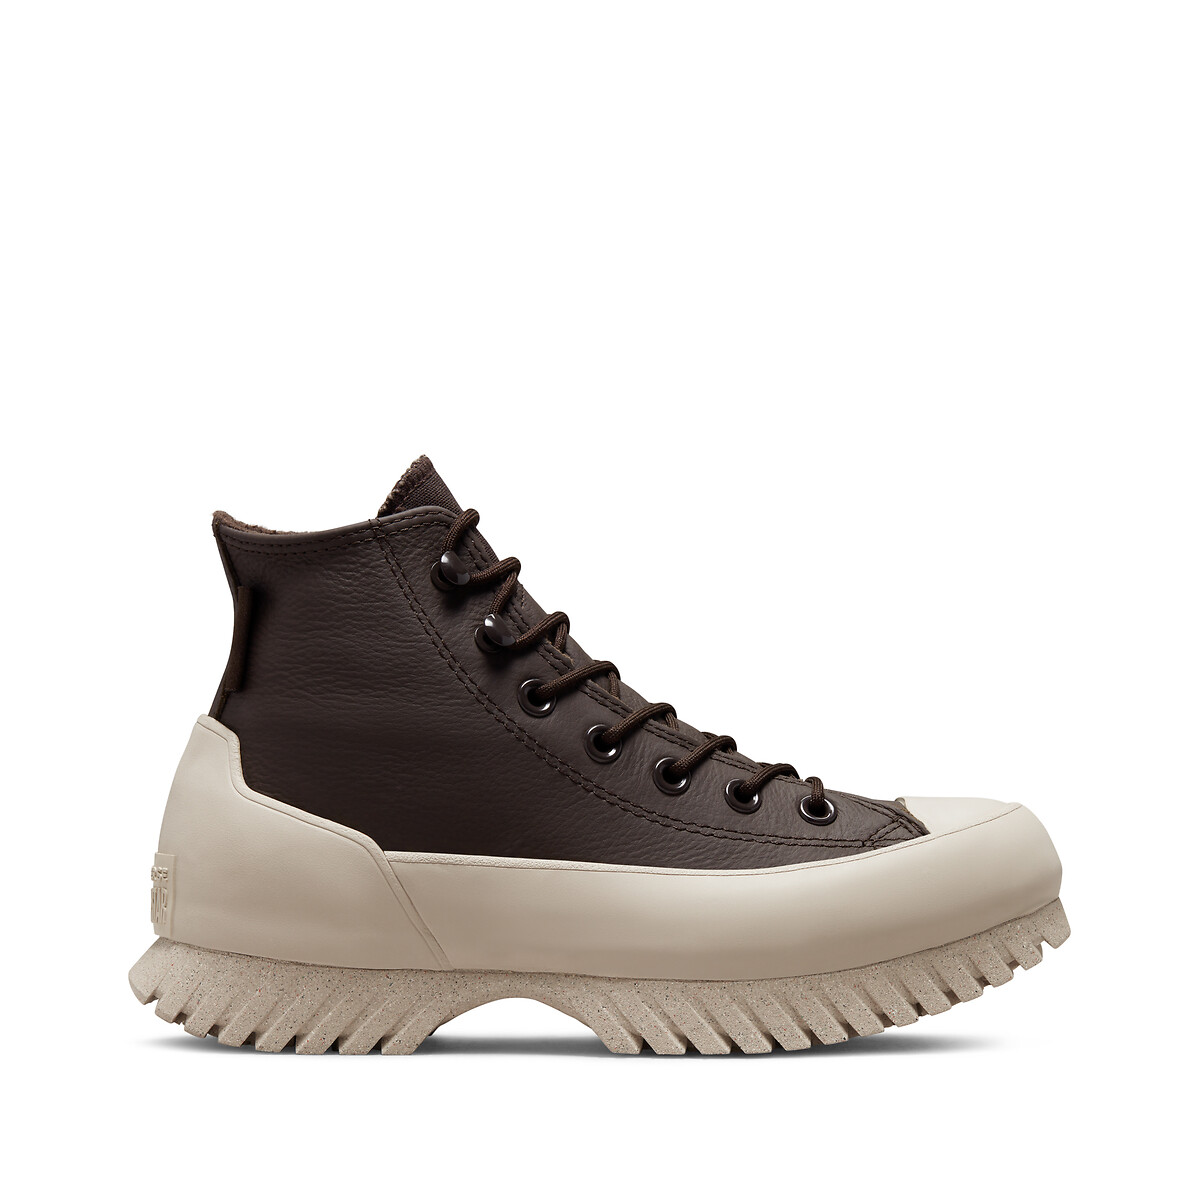 Zapatillas de piel star lugged 2.0 counter climate marrón Converse | La Redoute